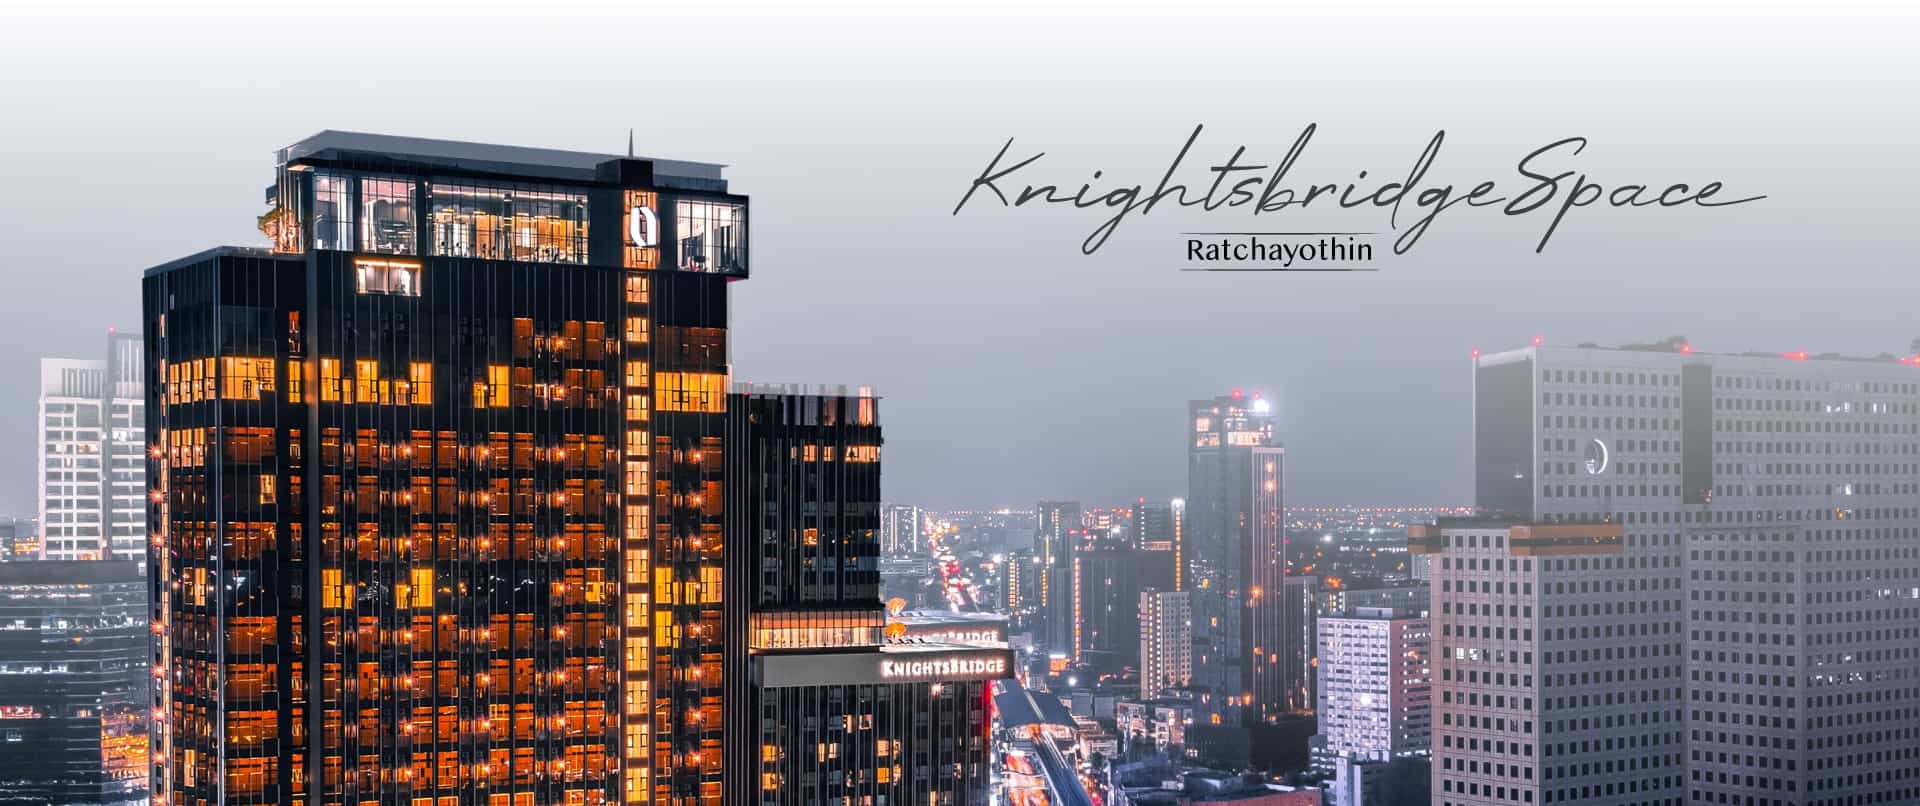 KnightsBridge space ratchayothin